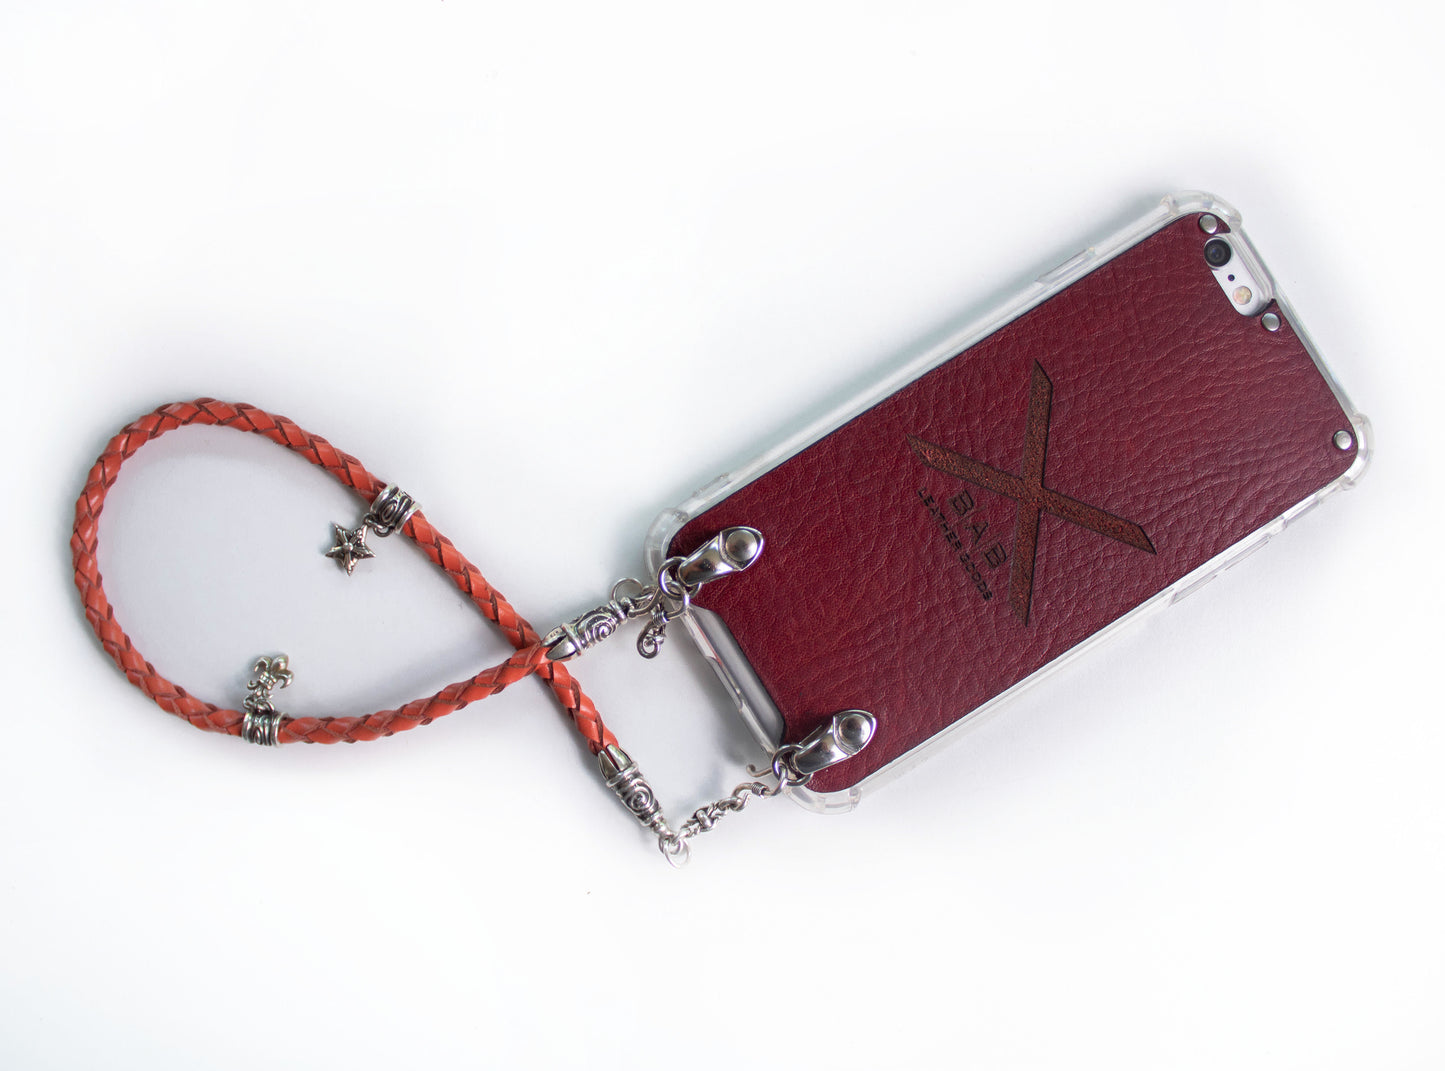 Full-Grain Genuine-tanned Leather & 925 Sterling Silver Case for iPhone. Orange Genuine Leather Bracelet/Choker/Strap 4 hand-braided strands.- F02